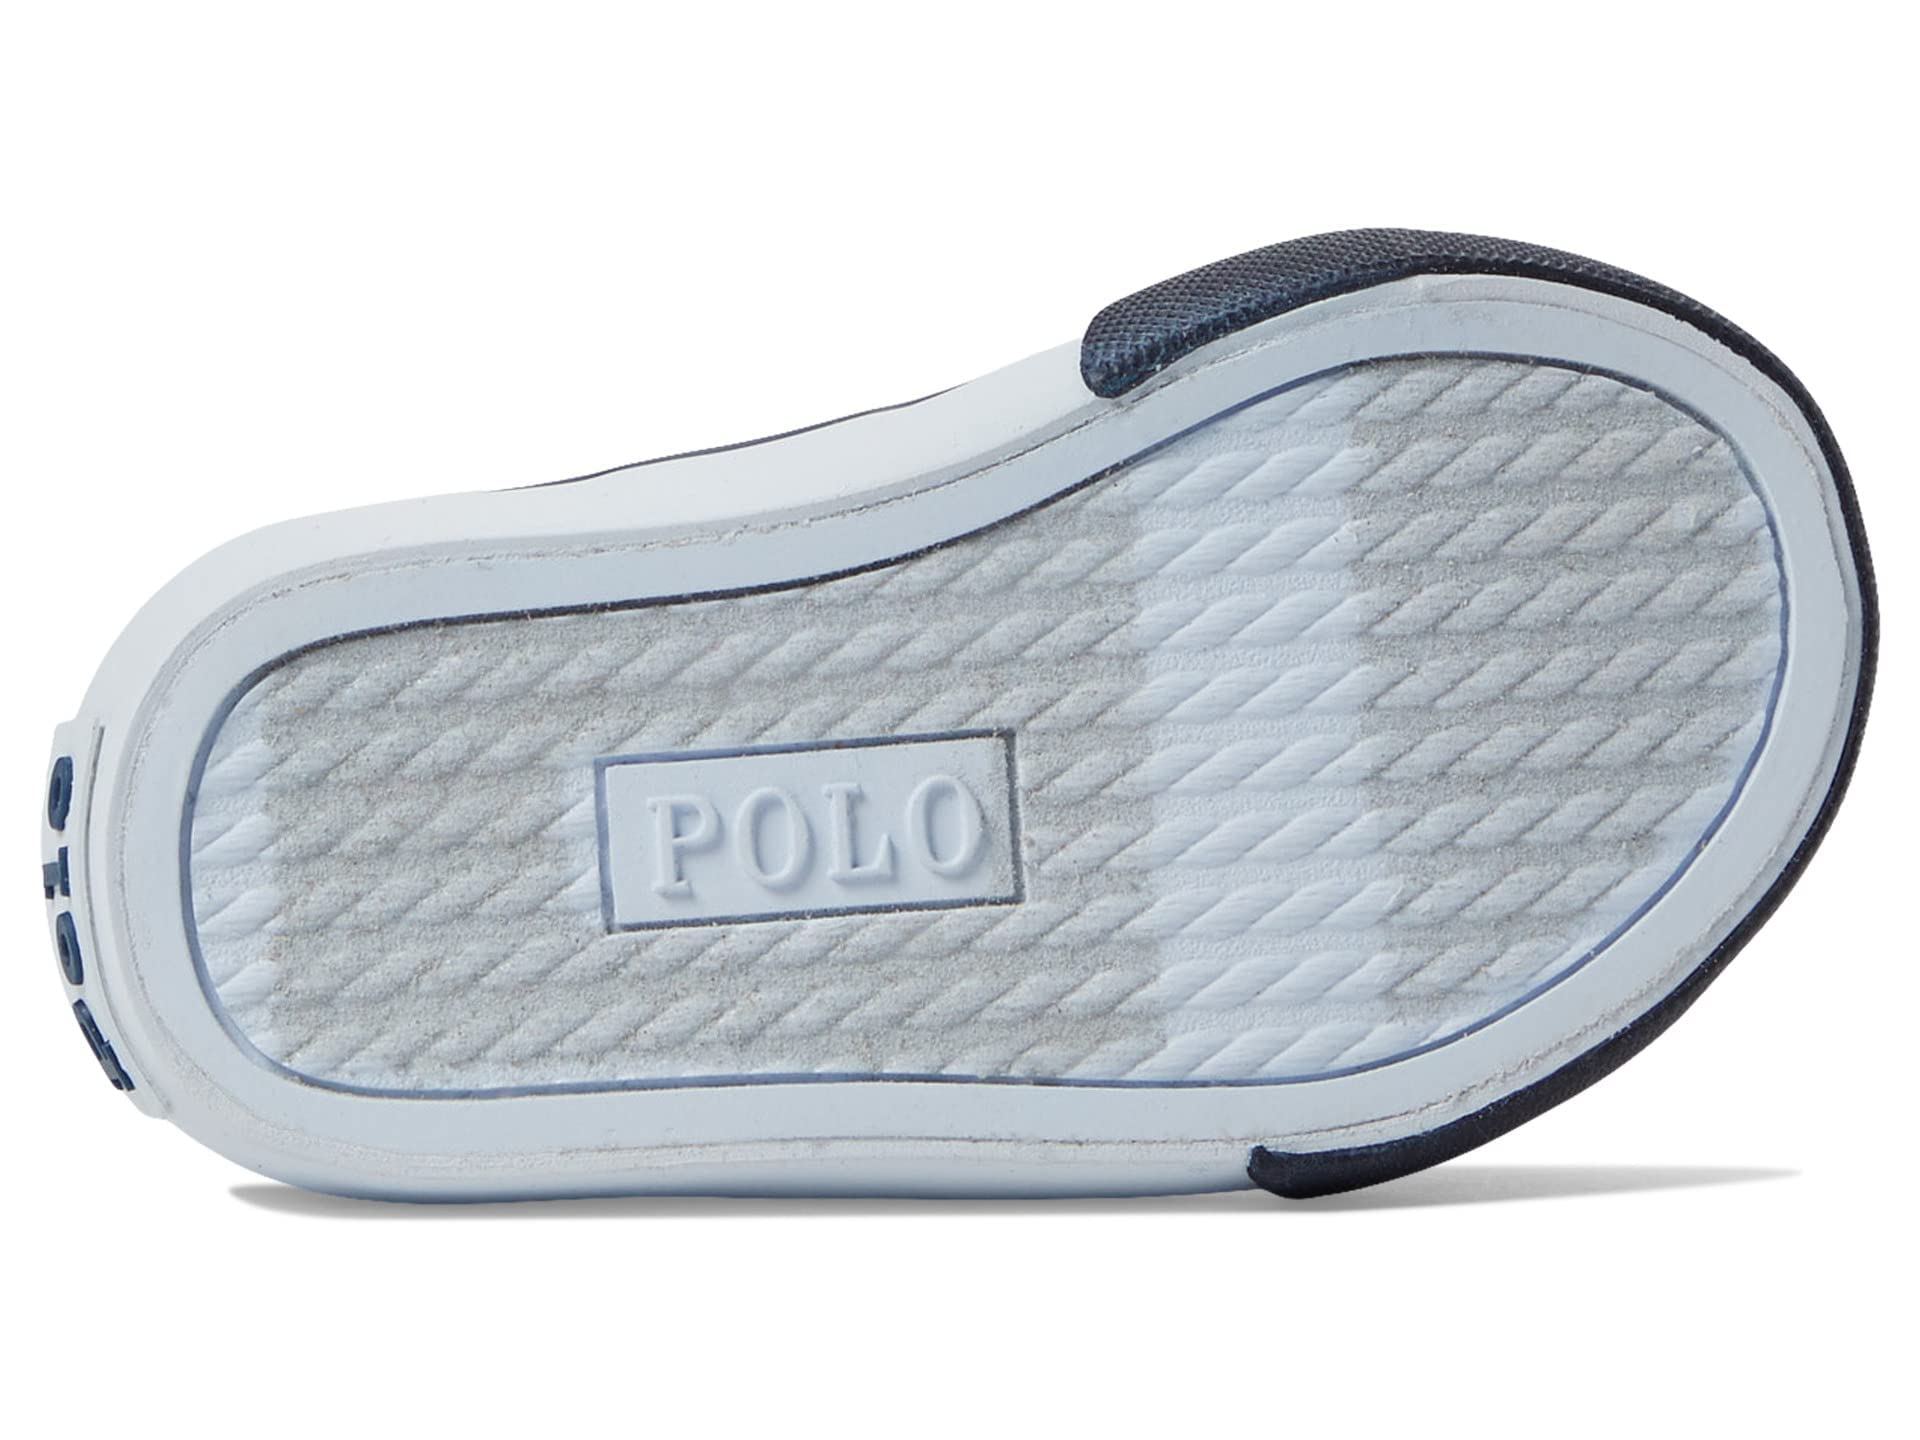 POLO RALPH LAUREN Unisex-Child Wescott Ps (Toddler) Sneaker